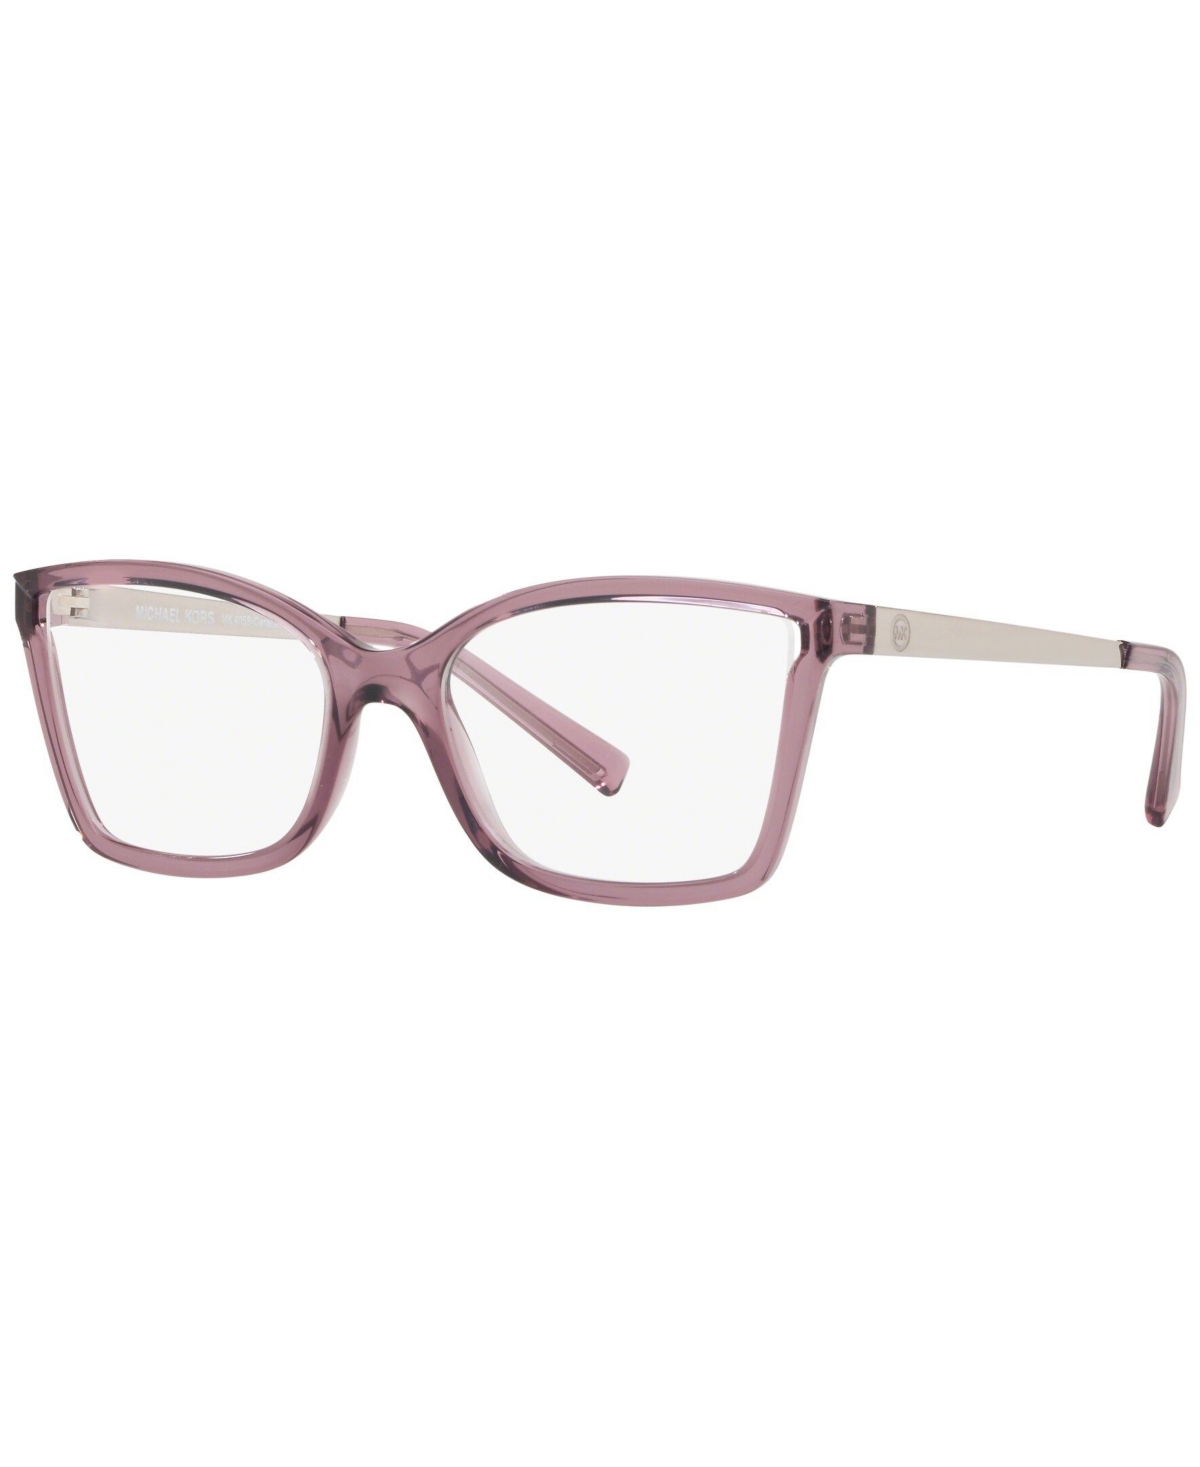 MK4058 Women's Rectangle Eyeglasses - Burgandy